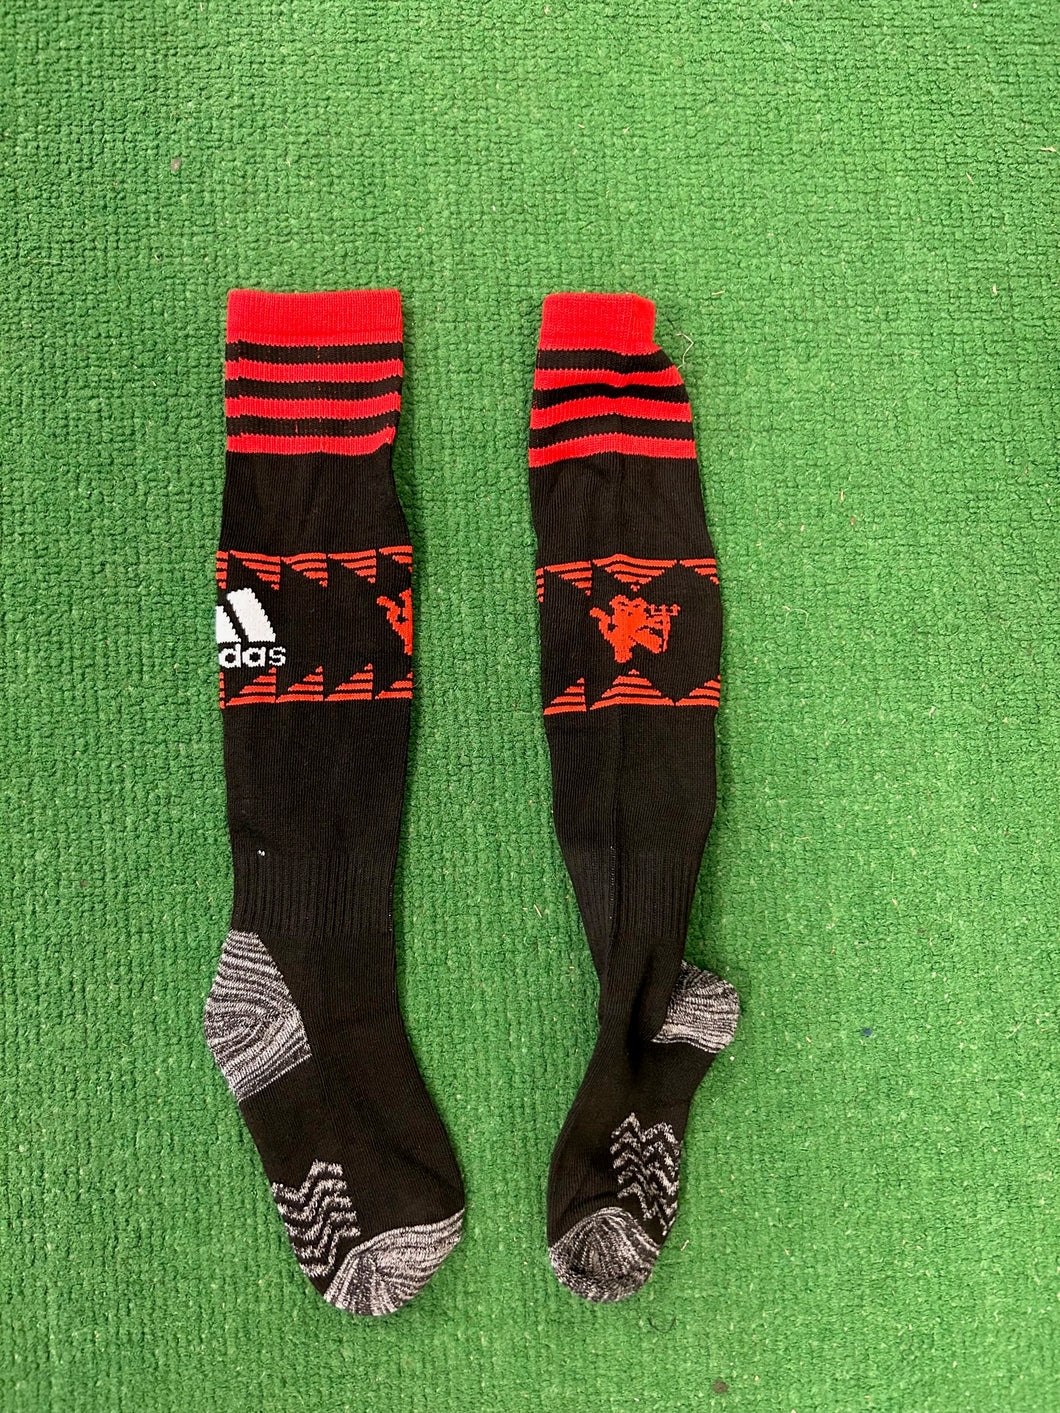 Manchester United Youth Soccer Socks